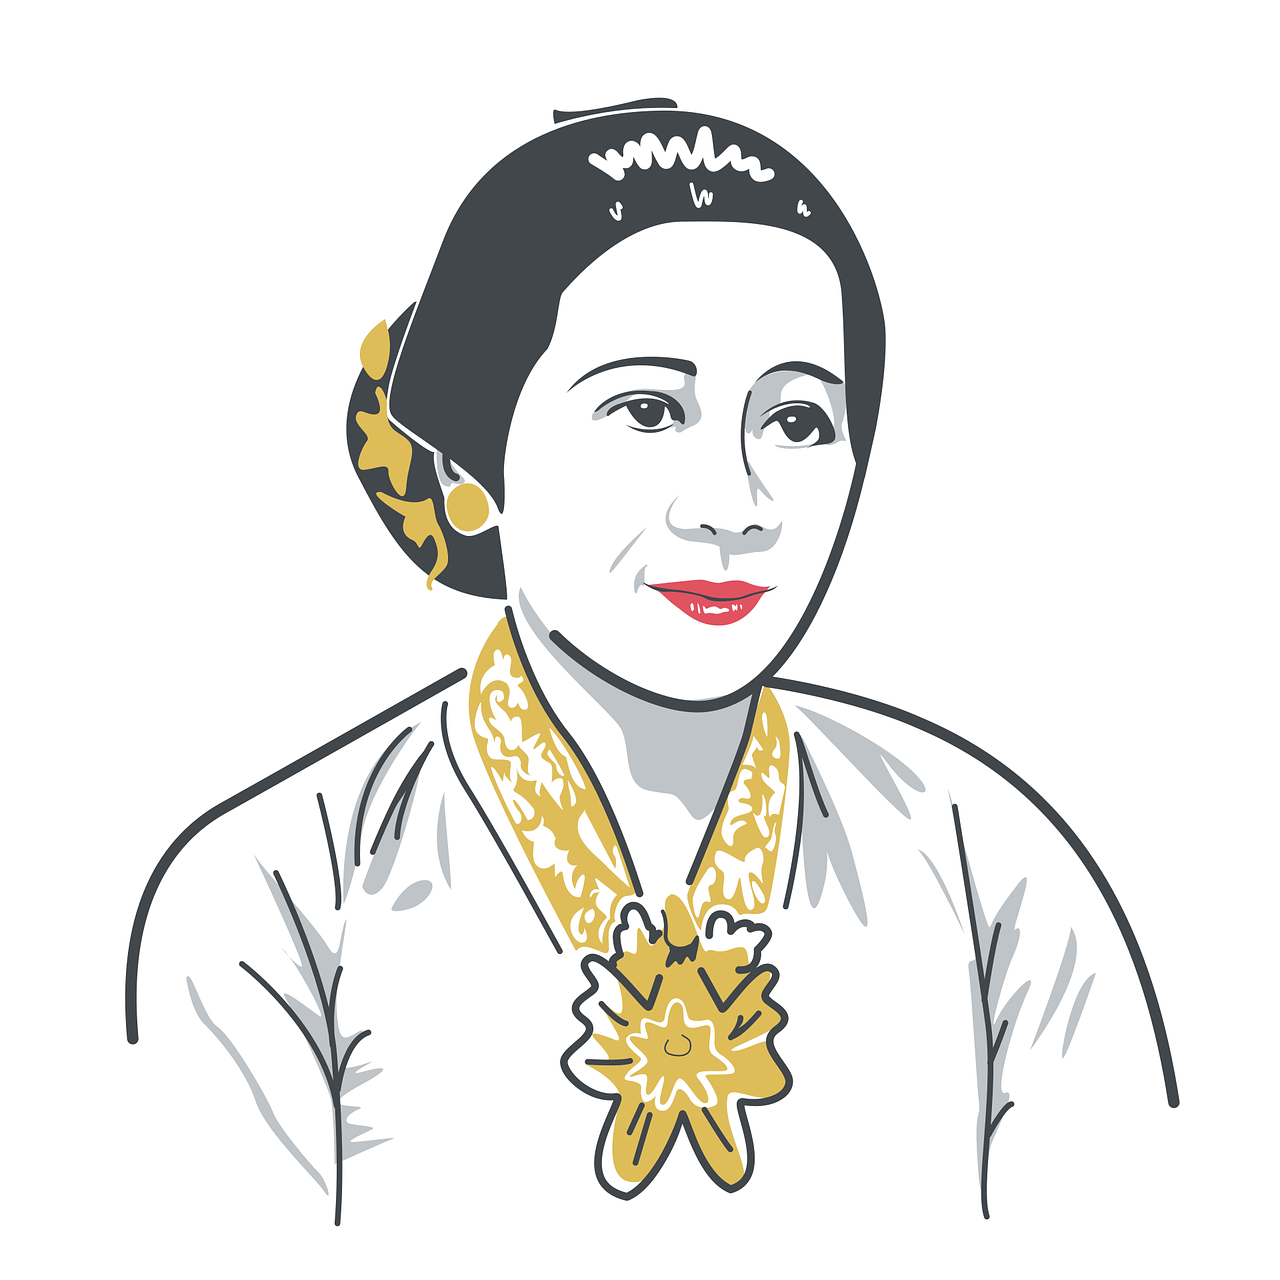 Mengenal sosok Kartini, sosok yang menjadi pelopor bagi kemajuan bagi perempuan Indonesia. Baca selengkapnya puisi berikut